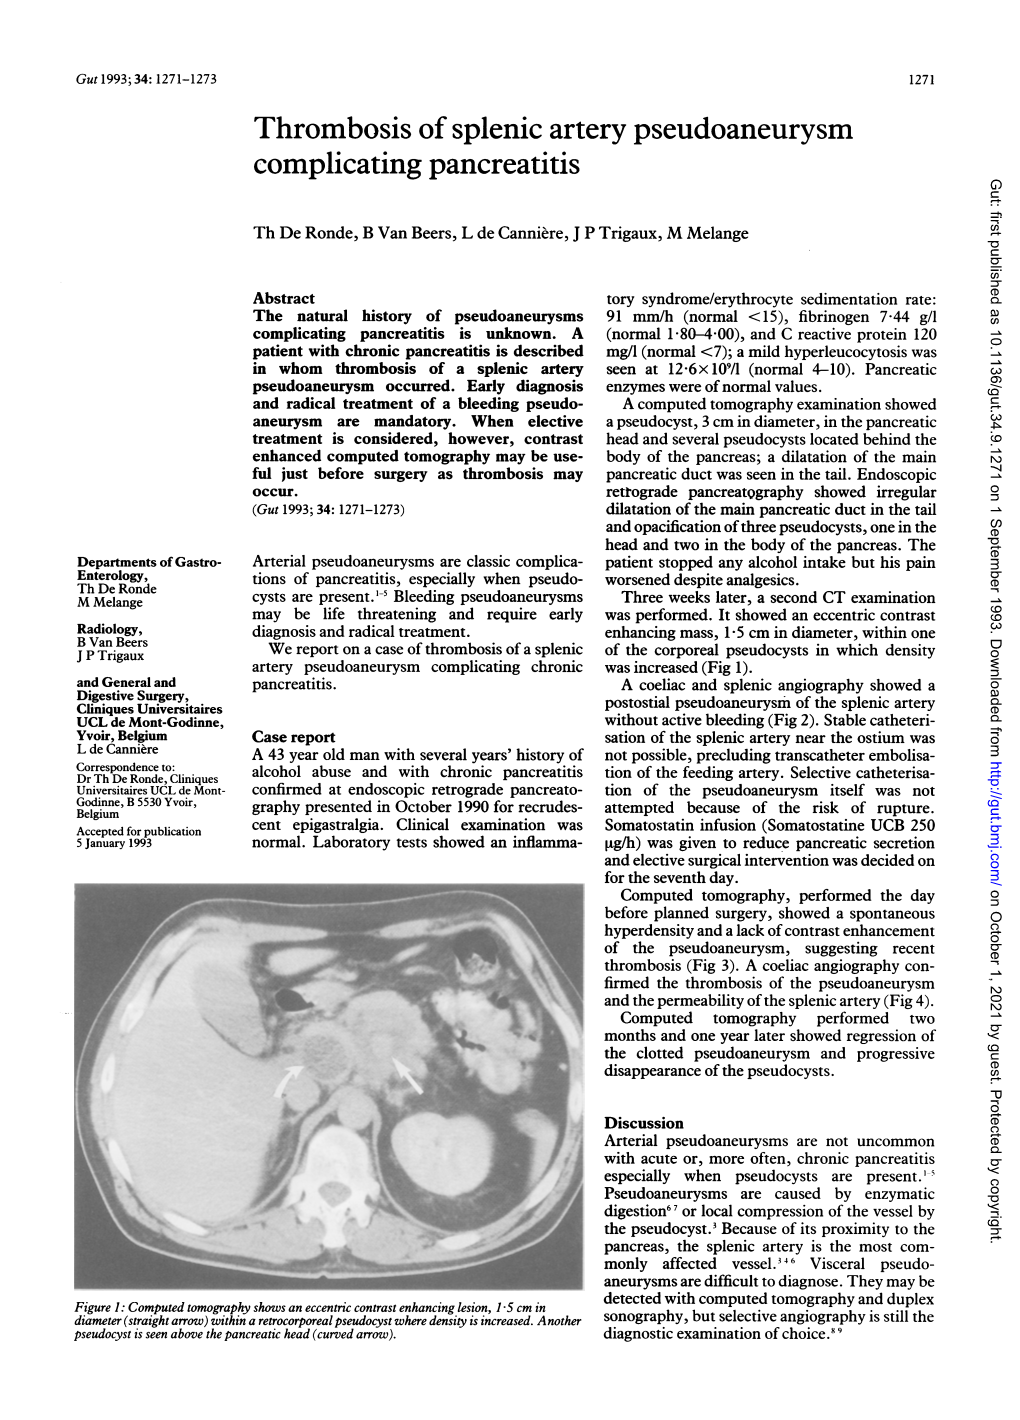 Thrombosis of Splenic Artery Pseudoaneurysm Complicating Pancreatitis